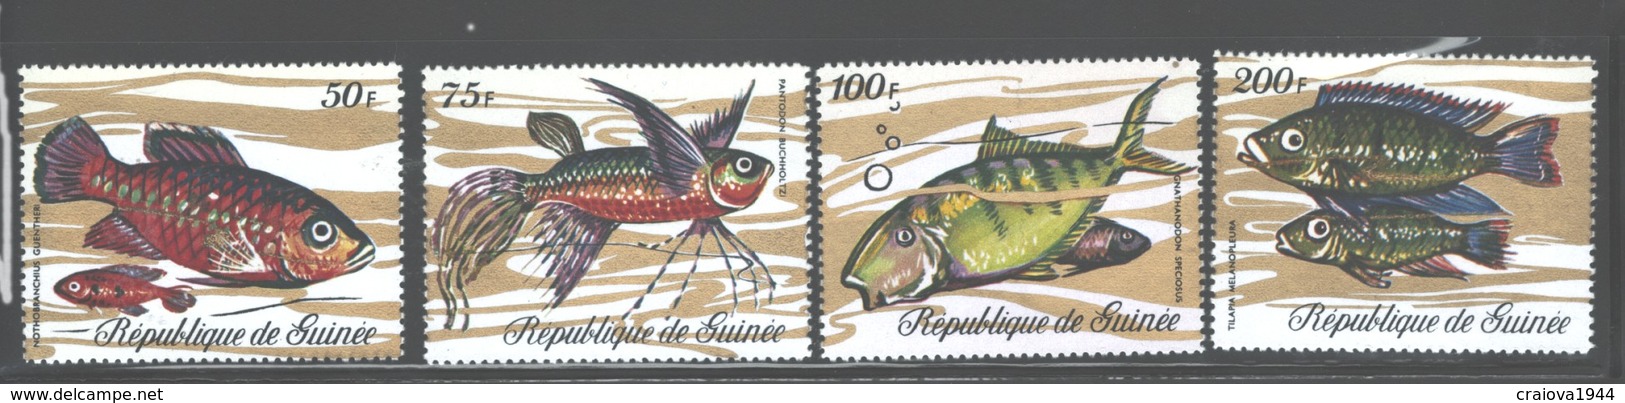 REPUBLIQUE DE GUINEE 1971 "FISHES" ##570-581 MNH - Guinea (1958-...)